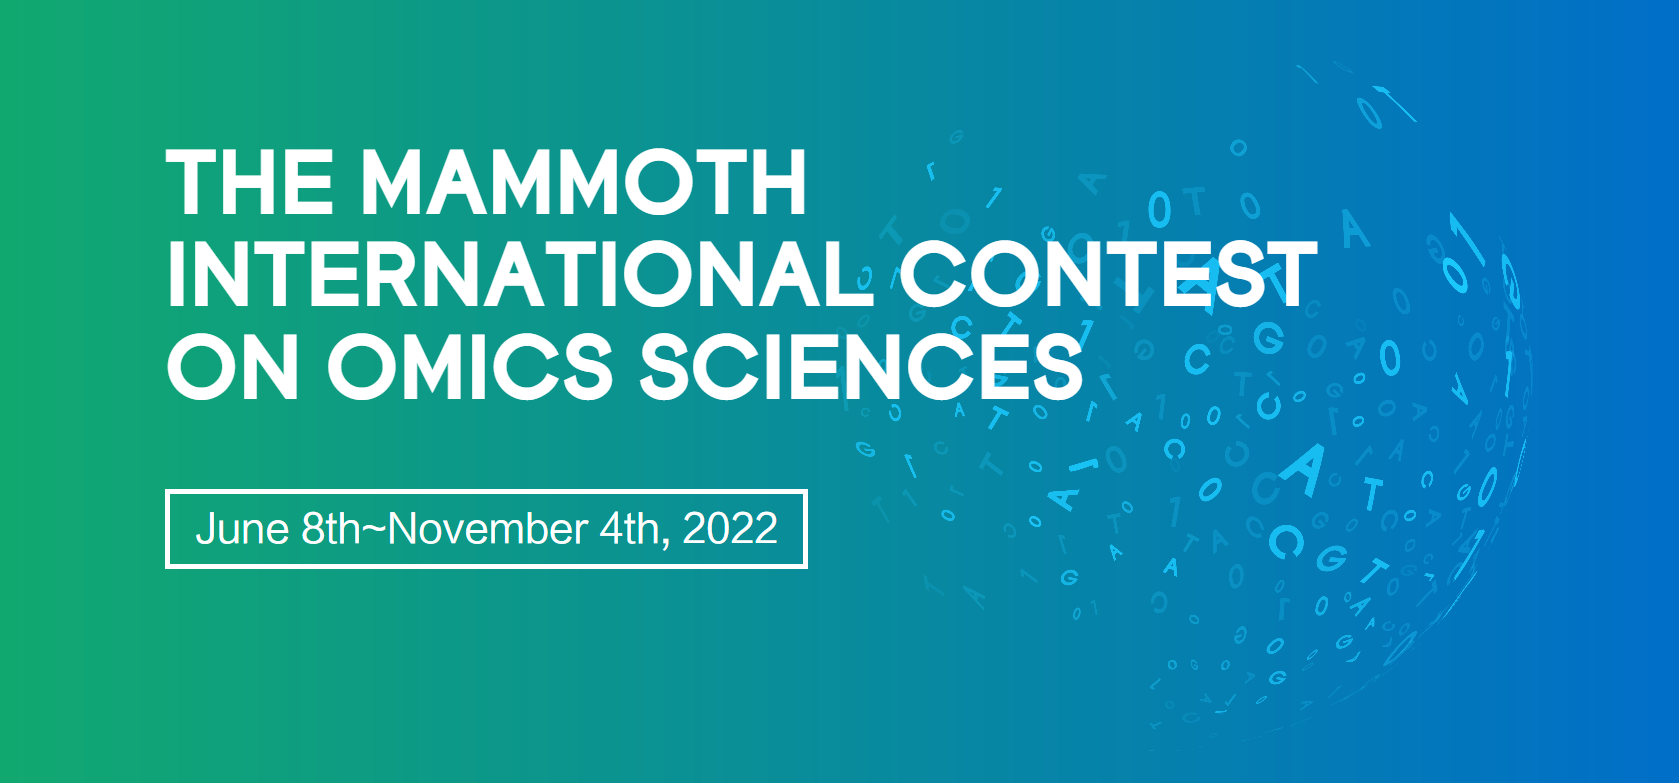 Raysync Co-organized The Mammoth International Contest on Omics Sciences 2022 